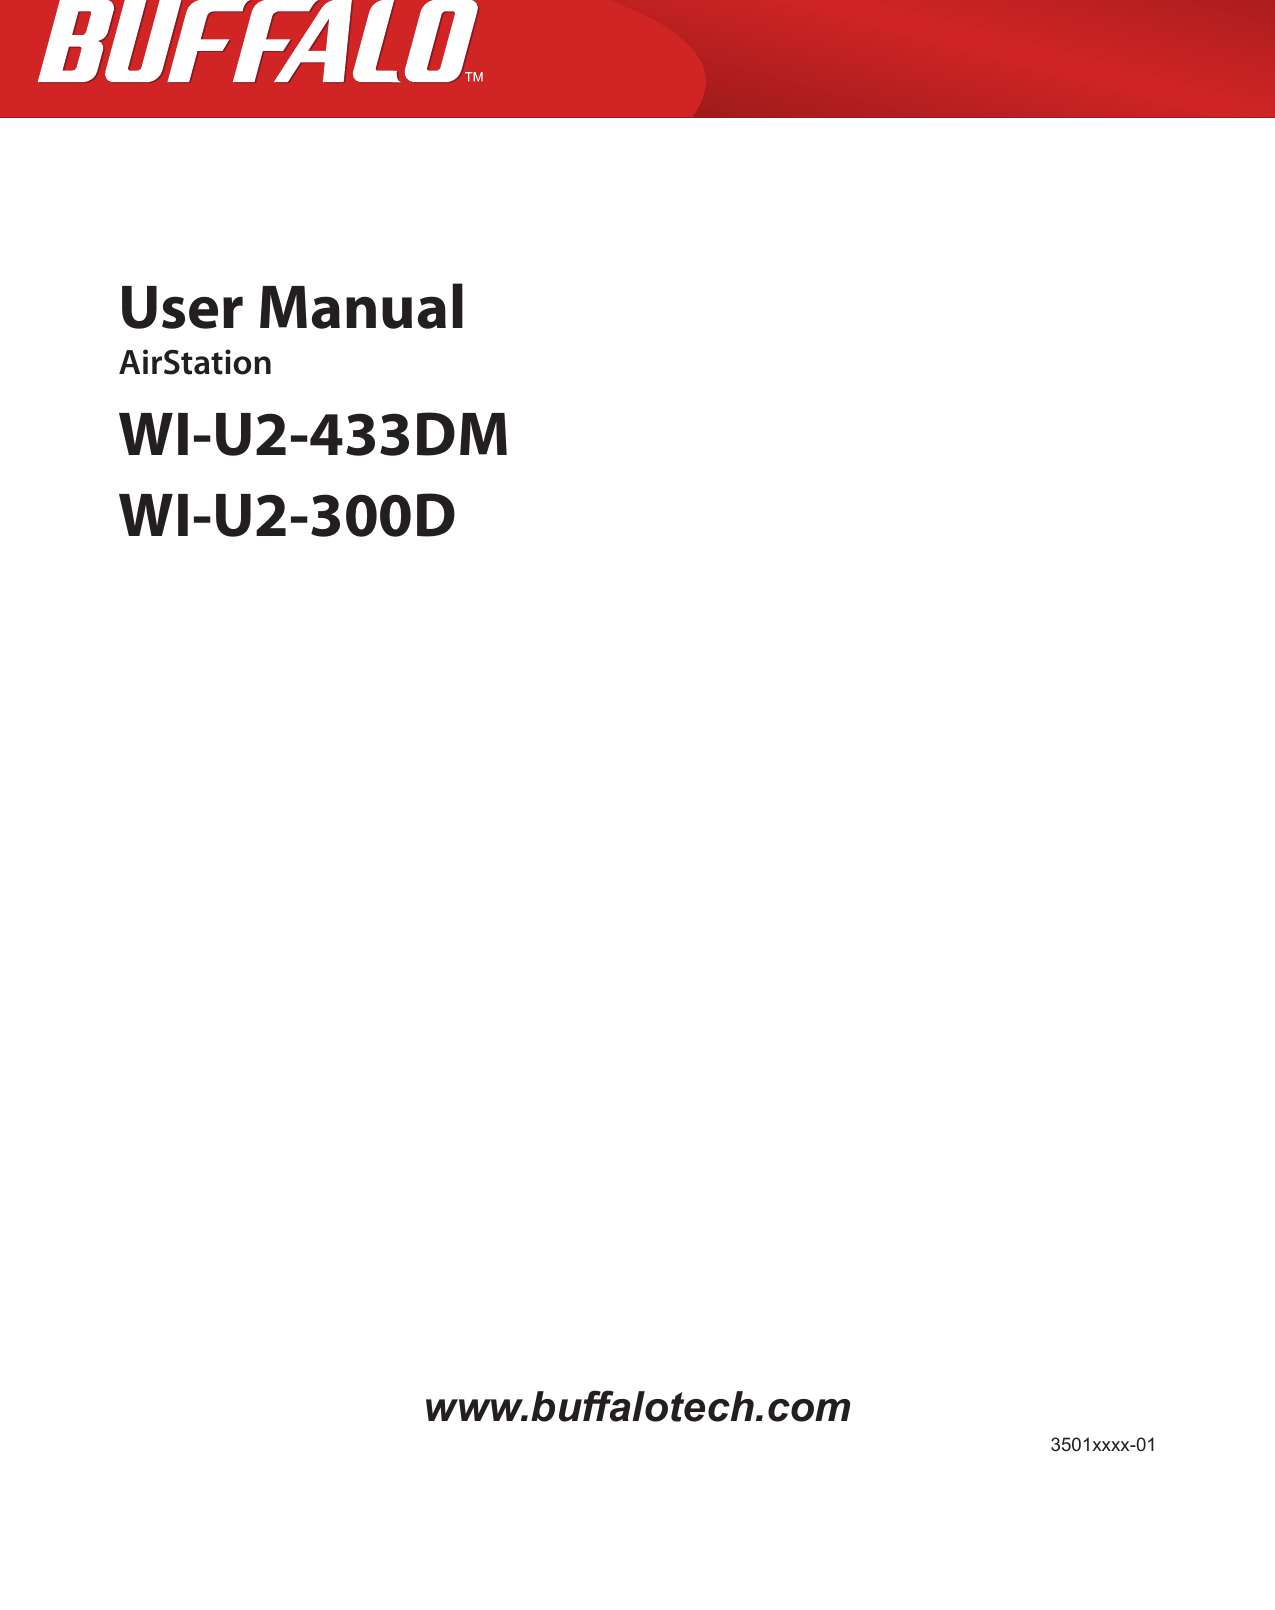     User Manual  AirStation  WI-U2-433DM  WI-U2-300D                                                    www.buffalotech.com  3501xxxx-01  